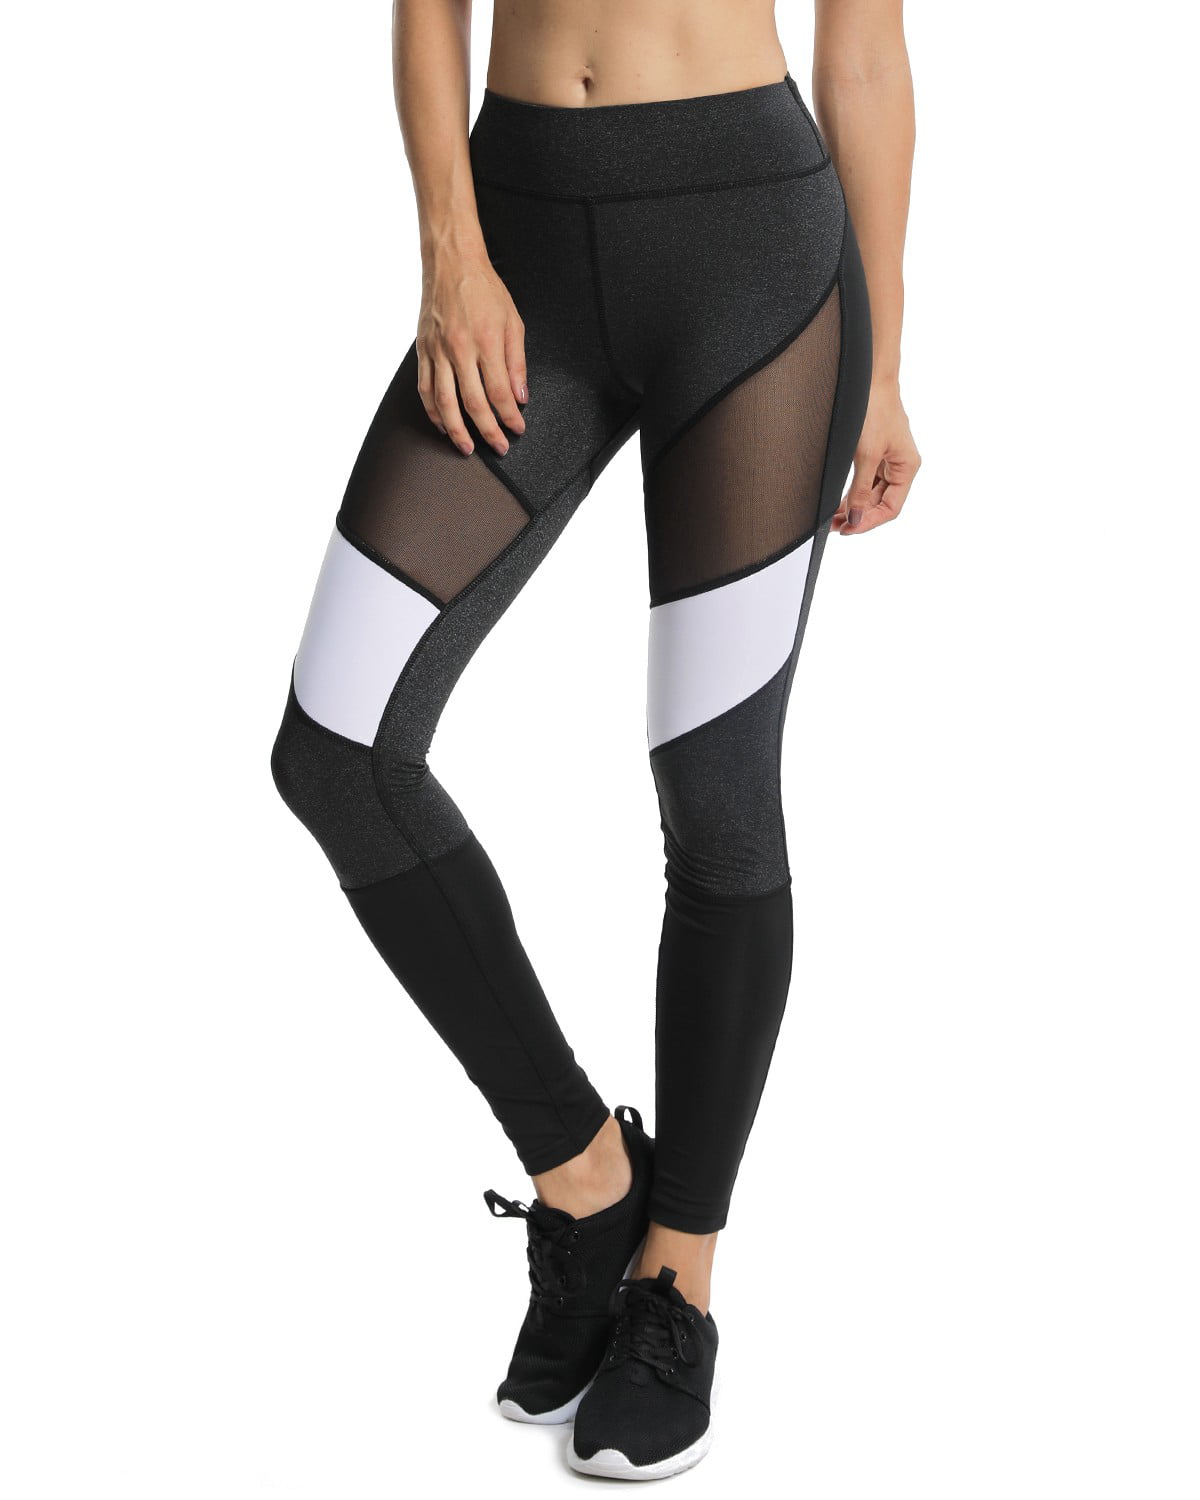 SEASUM - SEASUM High Waist Yoga Pants For Women Tummy Control Workout ...